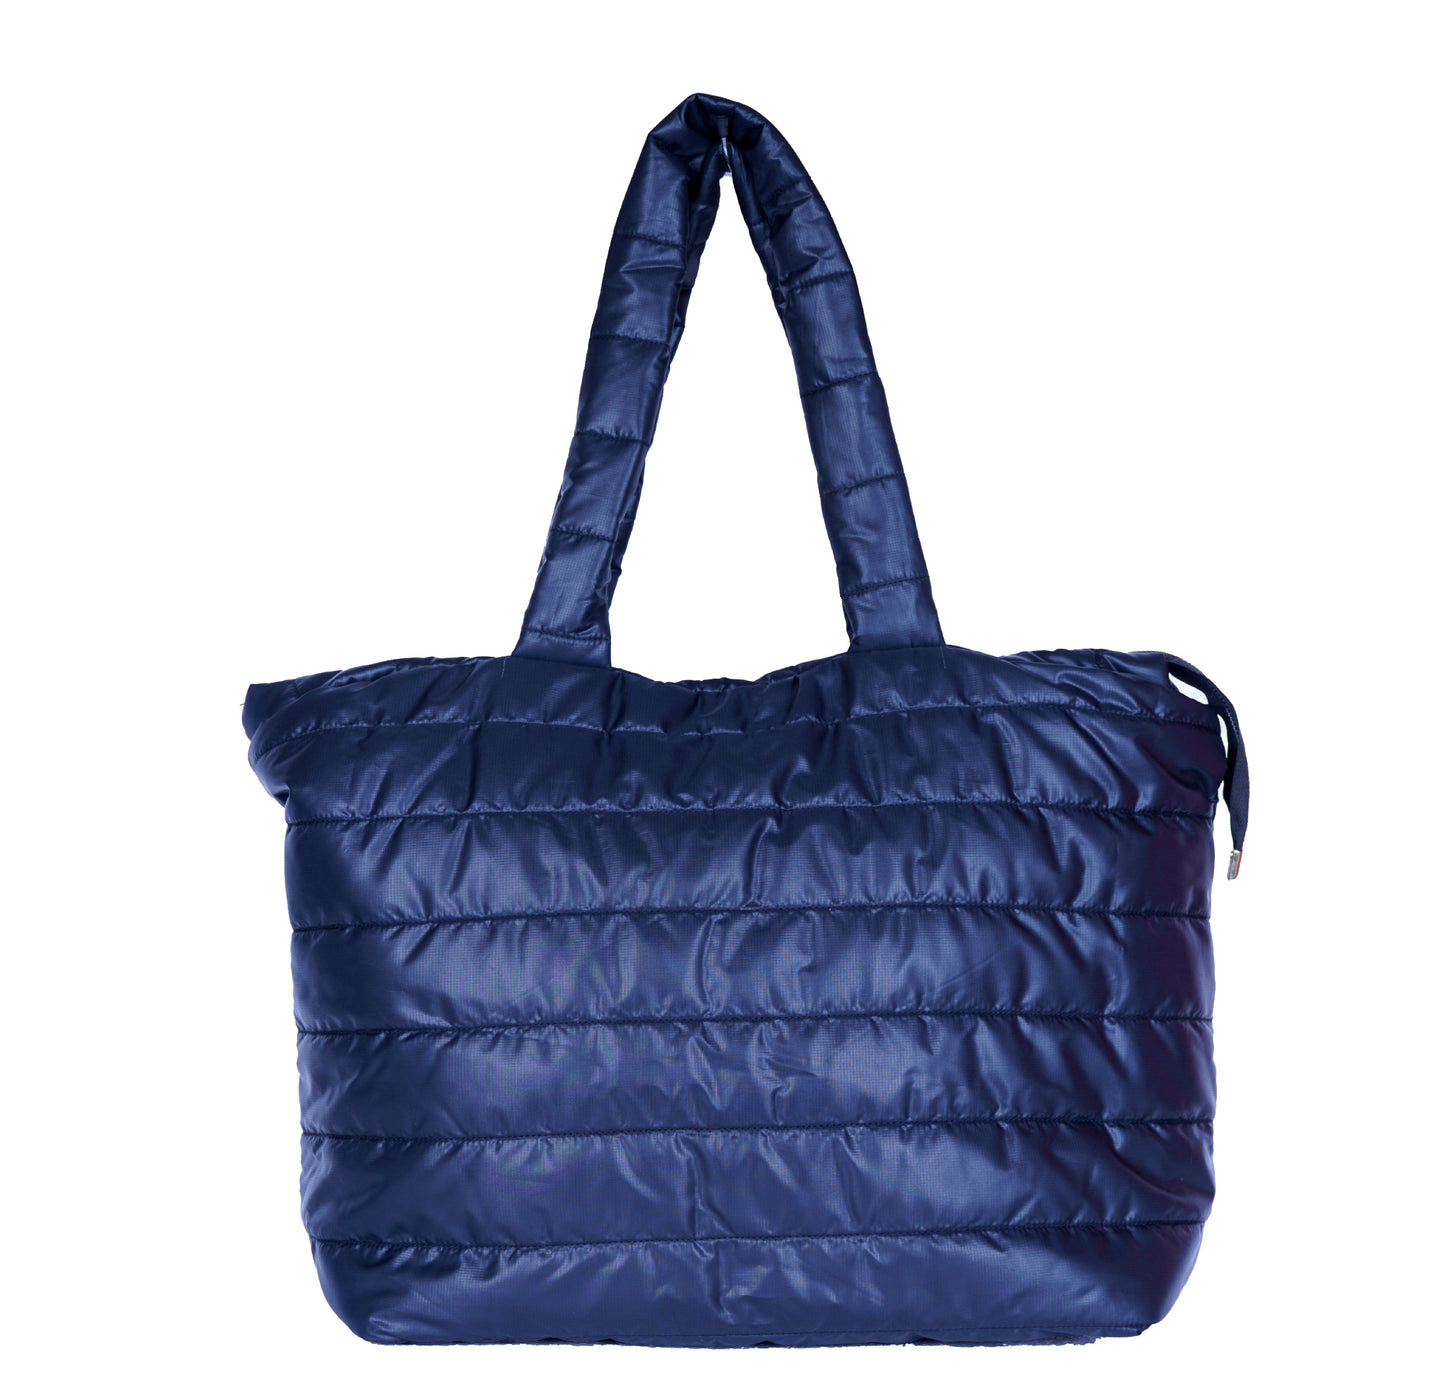 Sapphire Blue Bag